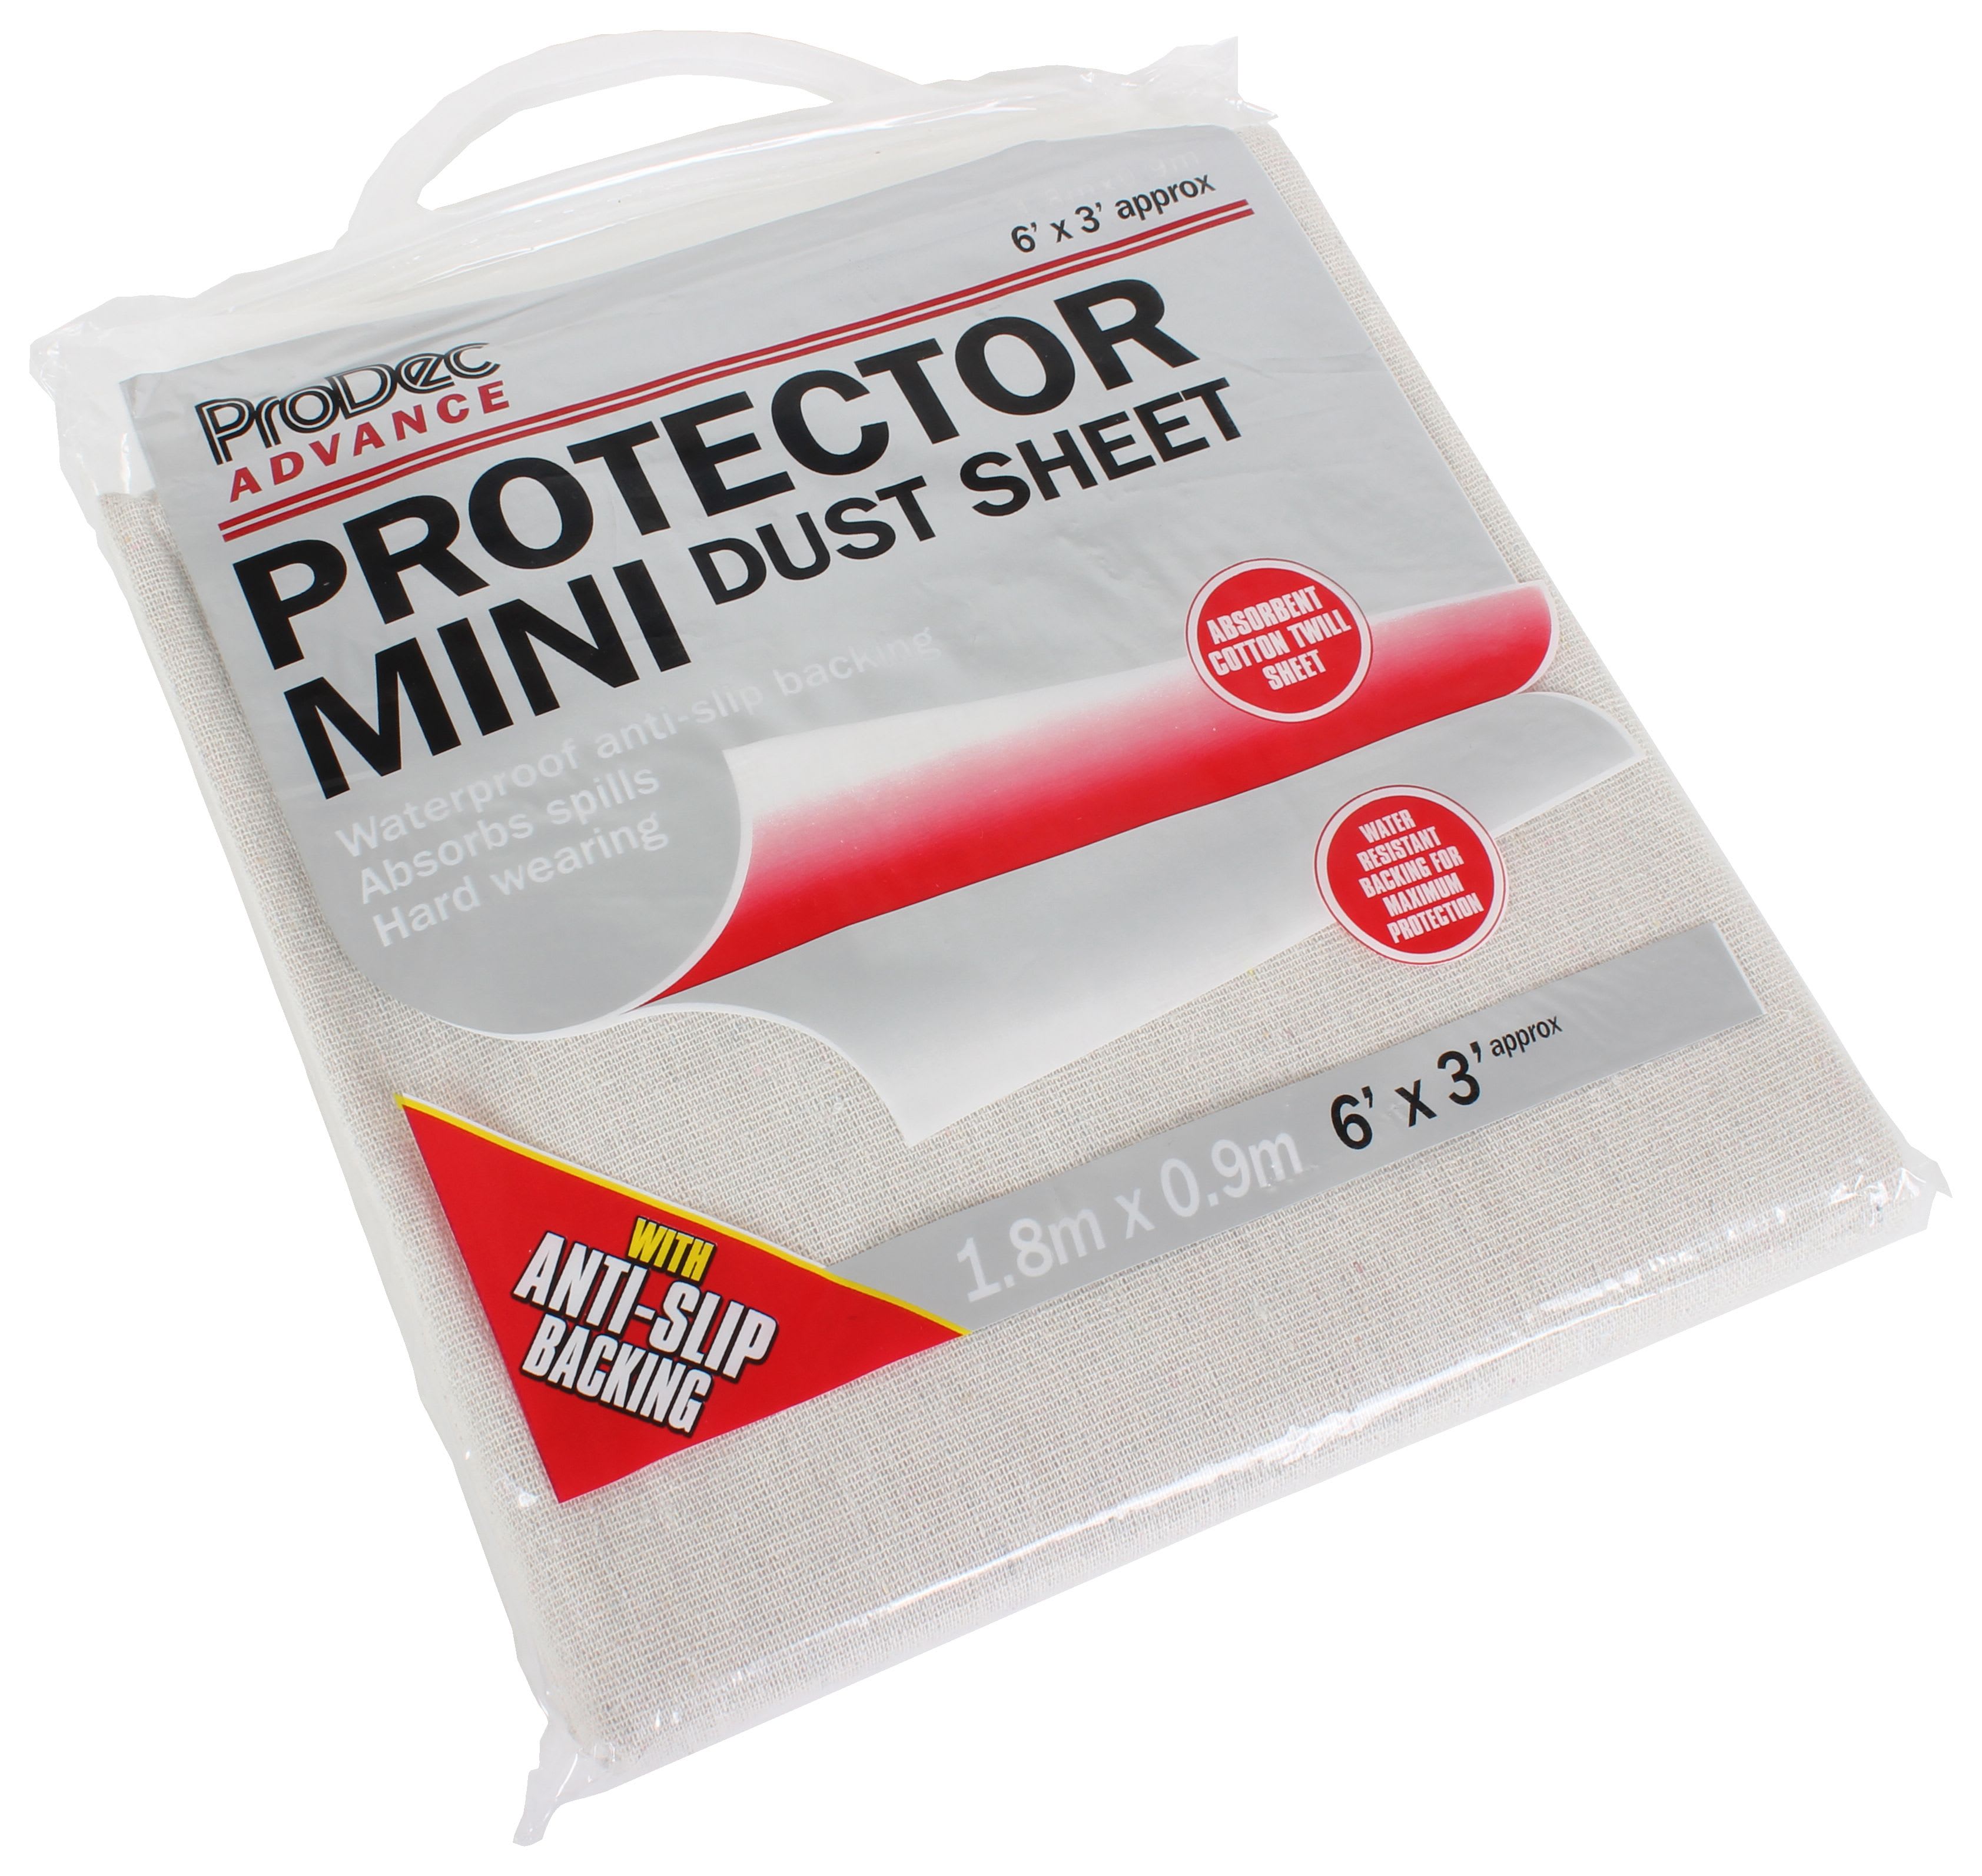 ProDec Advance Protector Dust Sheet - 6 x